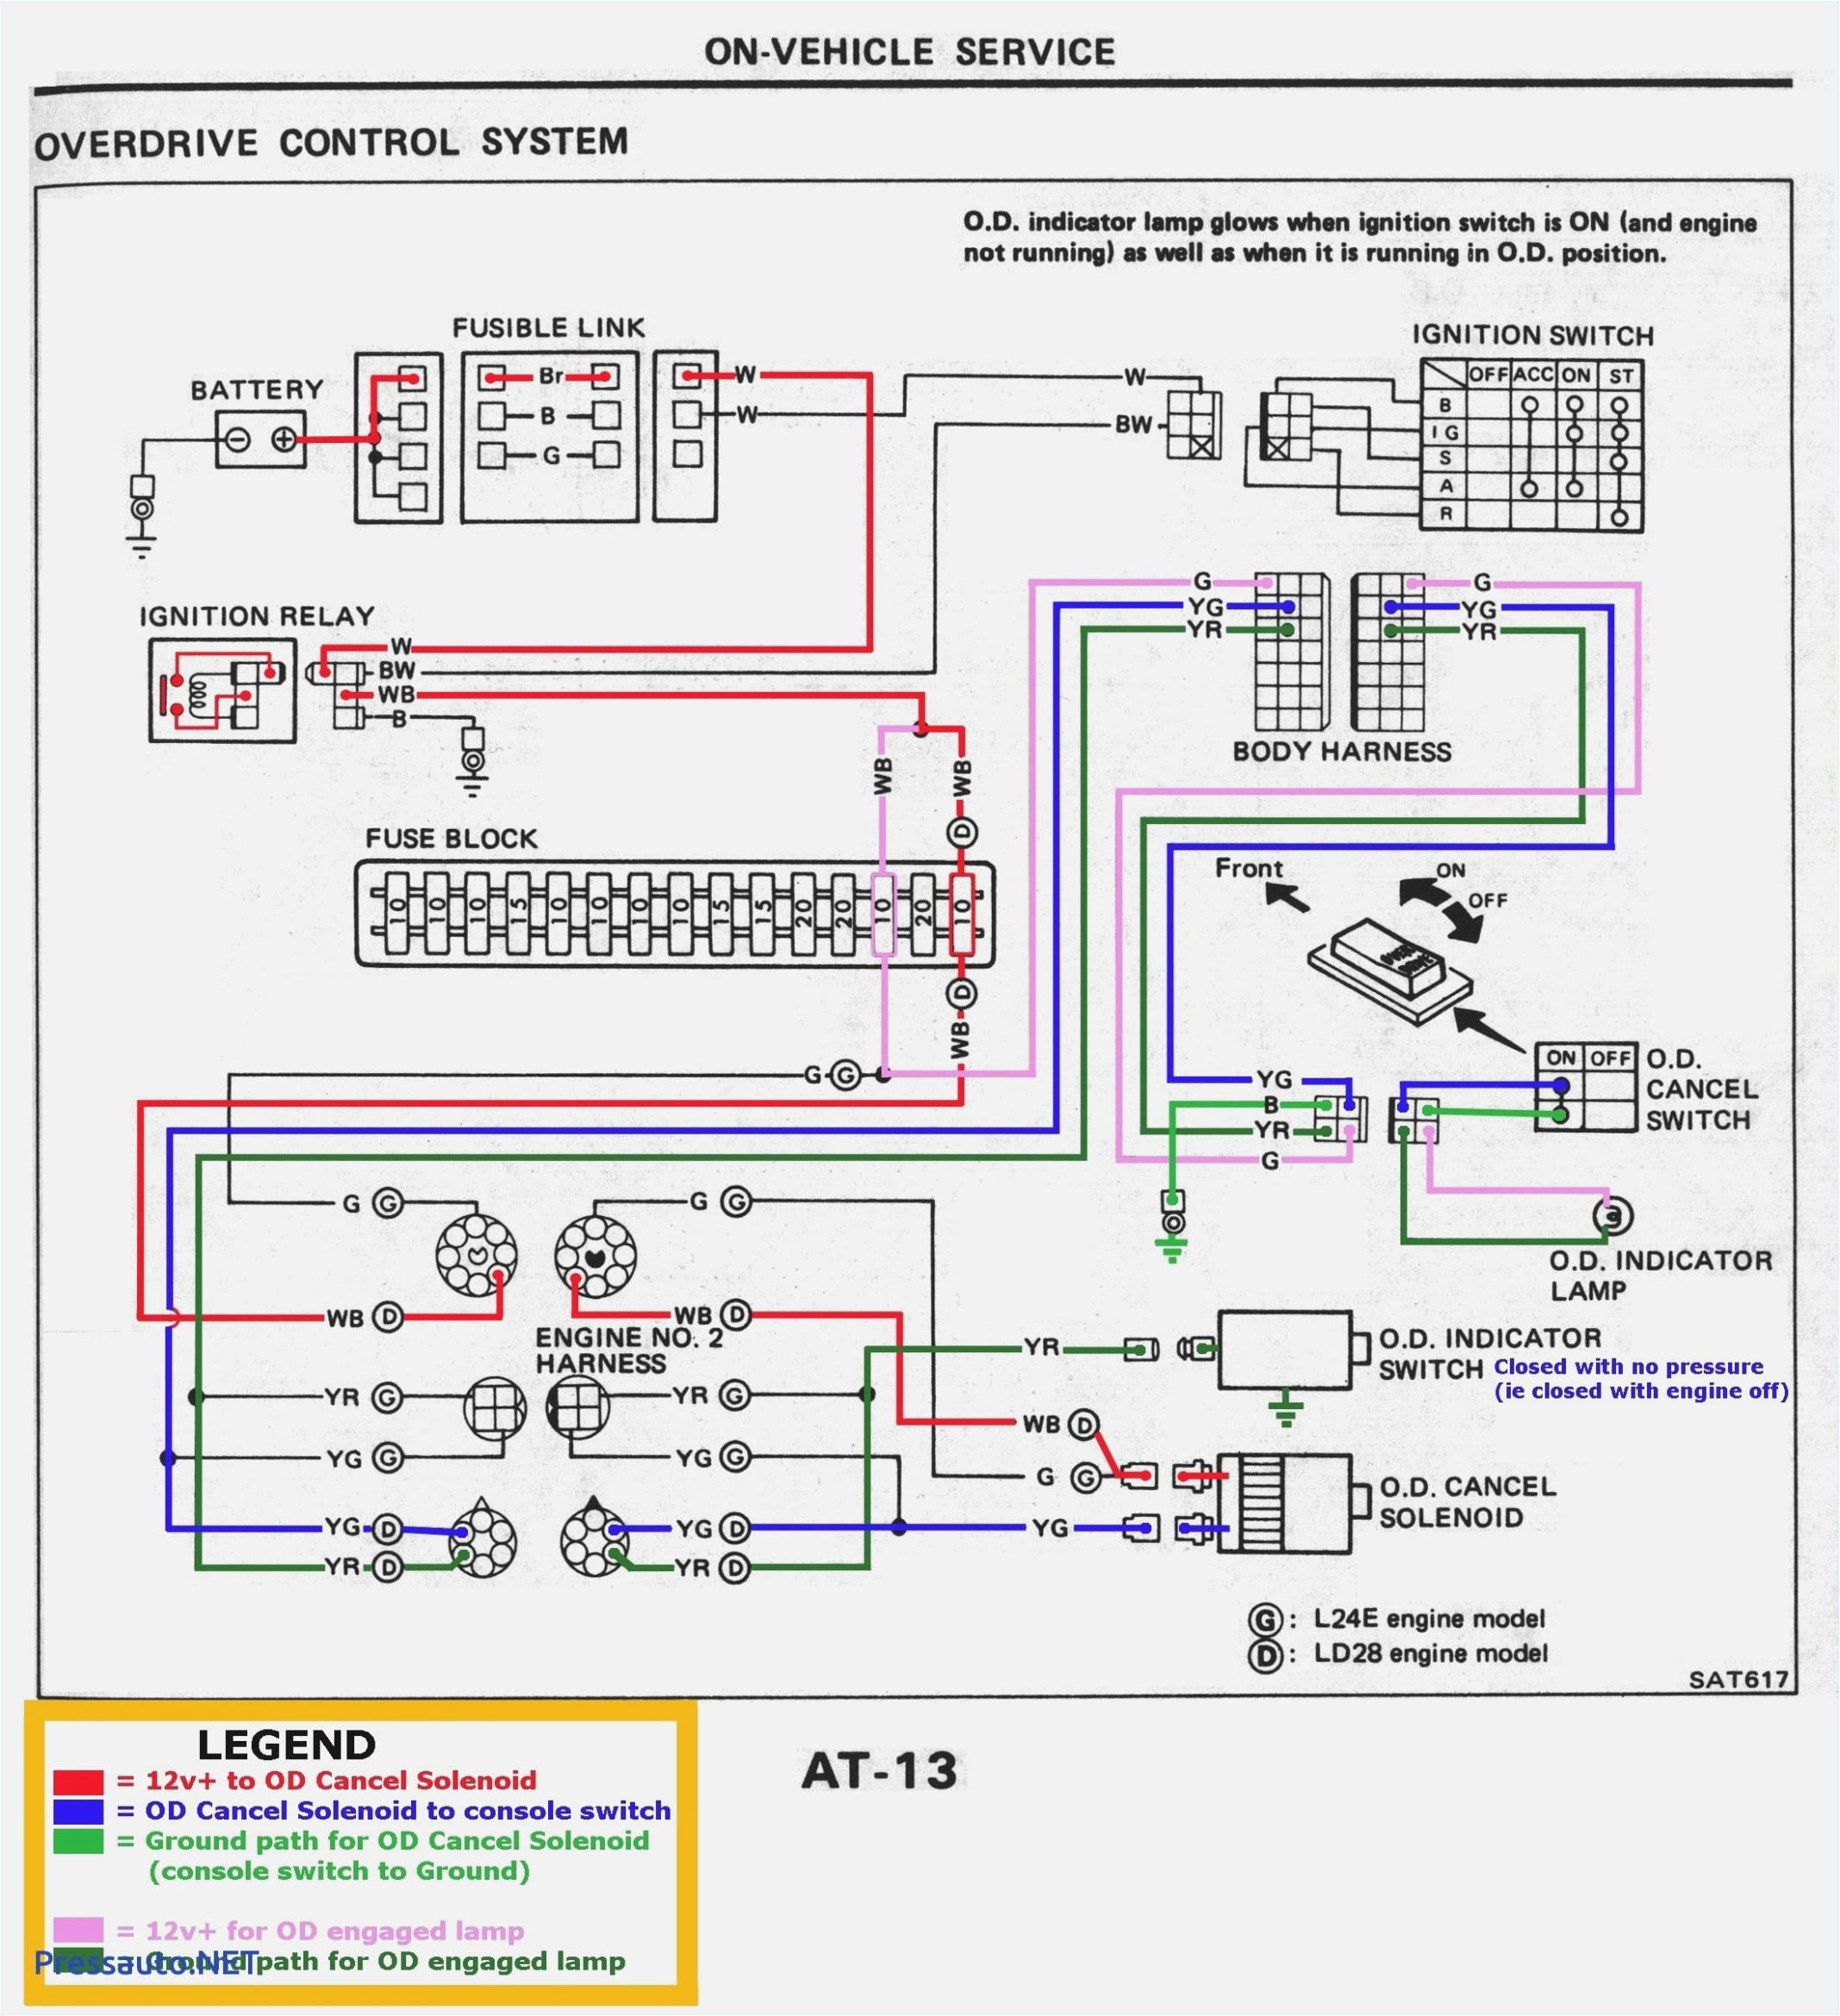 belimo wiring diagram wiring diagrams belimo lmb24 3 wiring diagram belimo actuator wiring diagram wiring